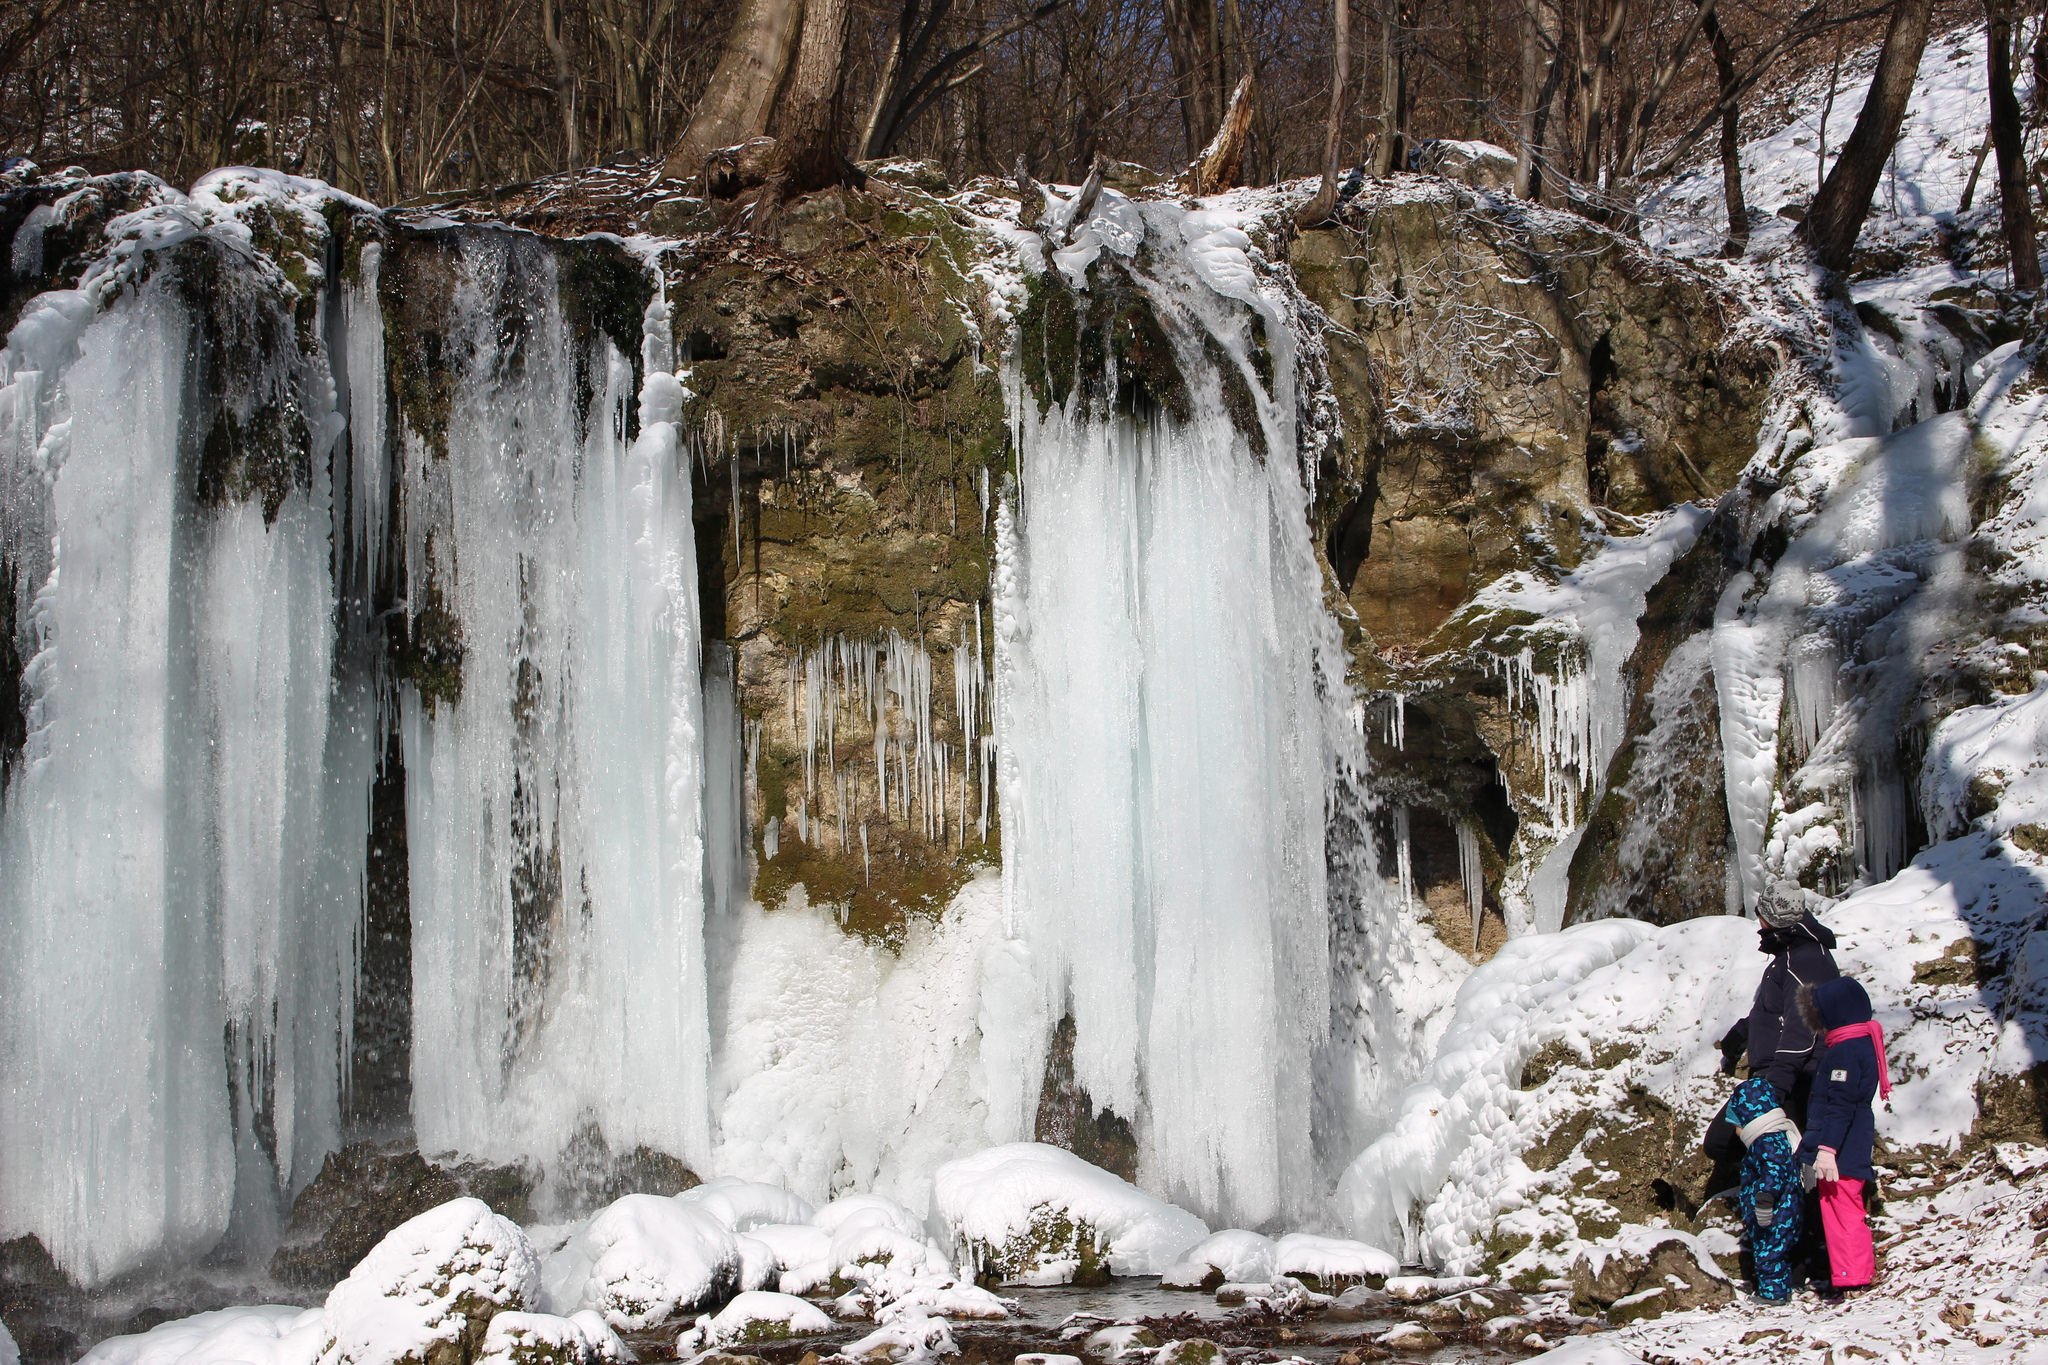 Hájske waterfalls, Slovak Karst National Park, Slovakia – 04